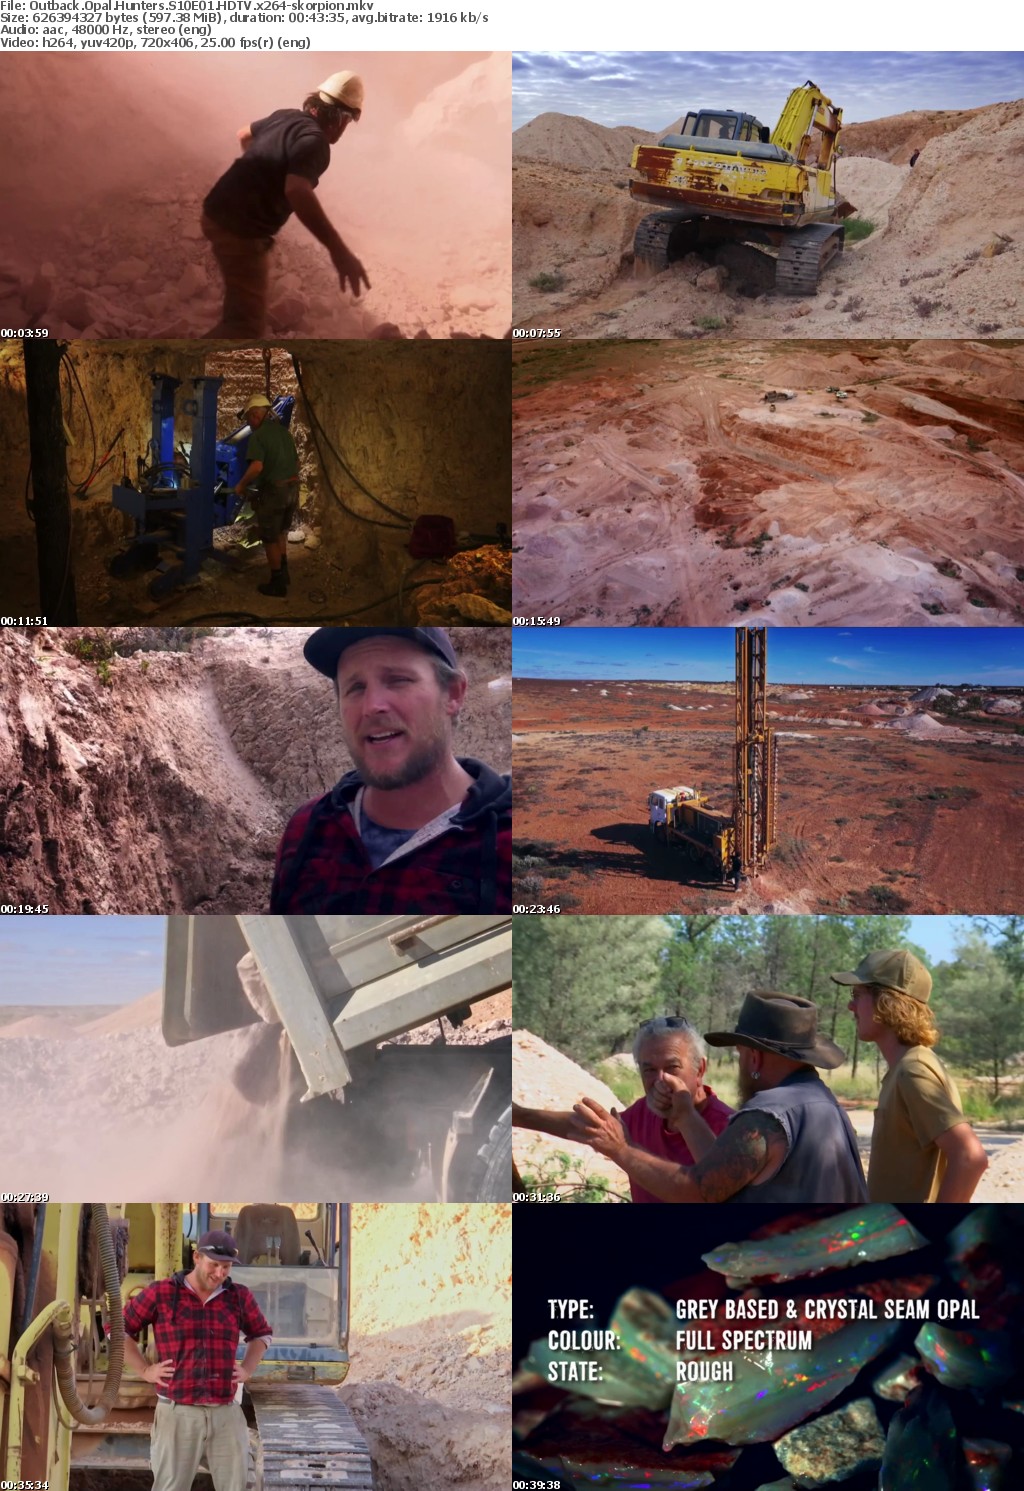 Outback Opal Hunters S10E01 HDTV x264-skorpion mkv